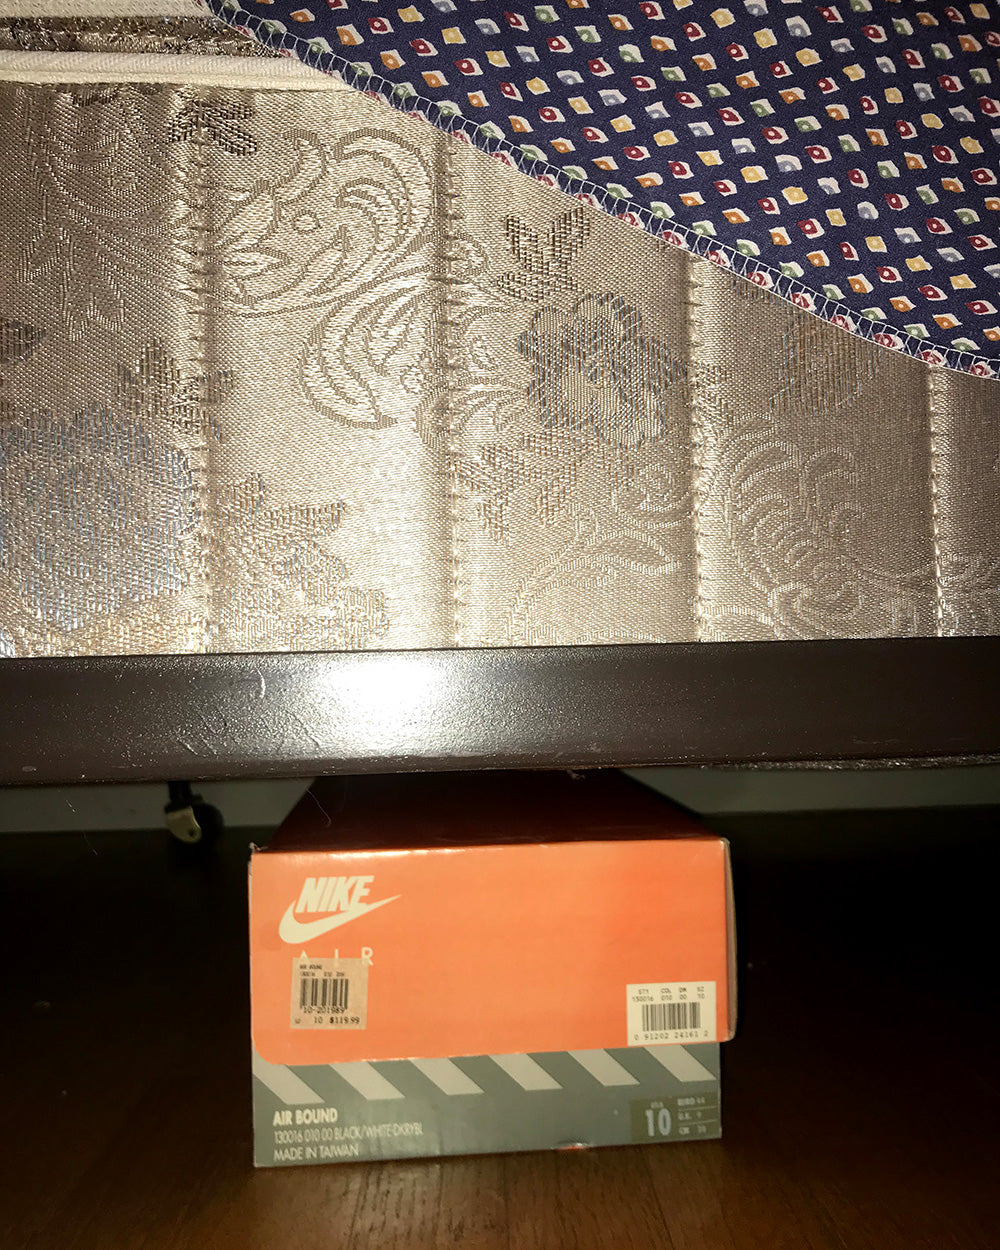 SPITGAN WEBZINE #3 Photo 8. Nike shoebox under the bed. Vancouver, BC